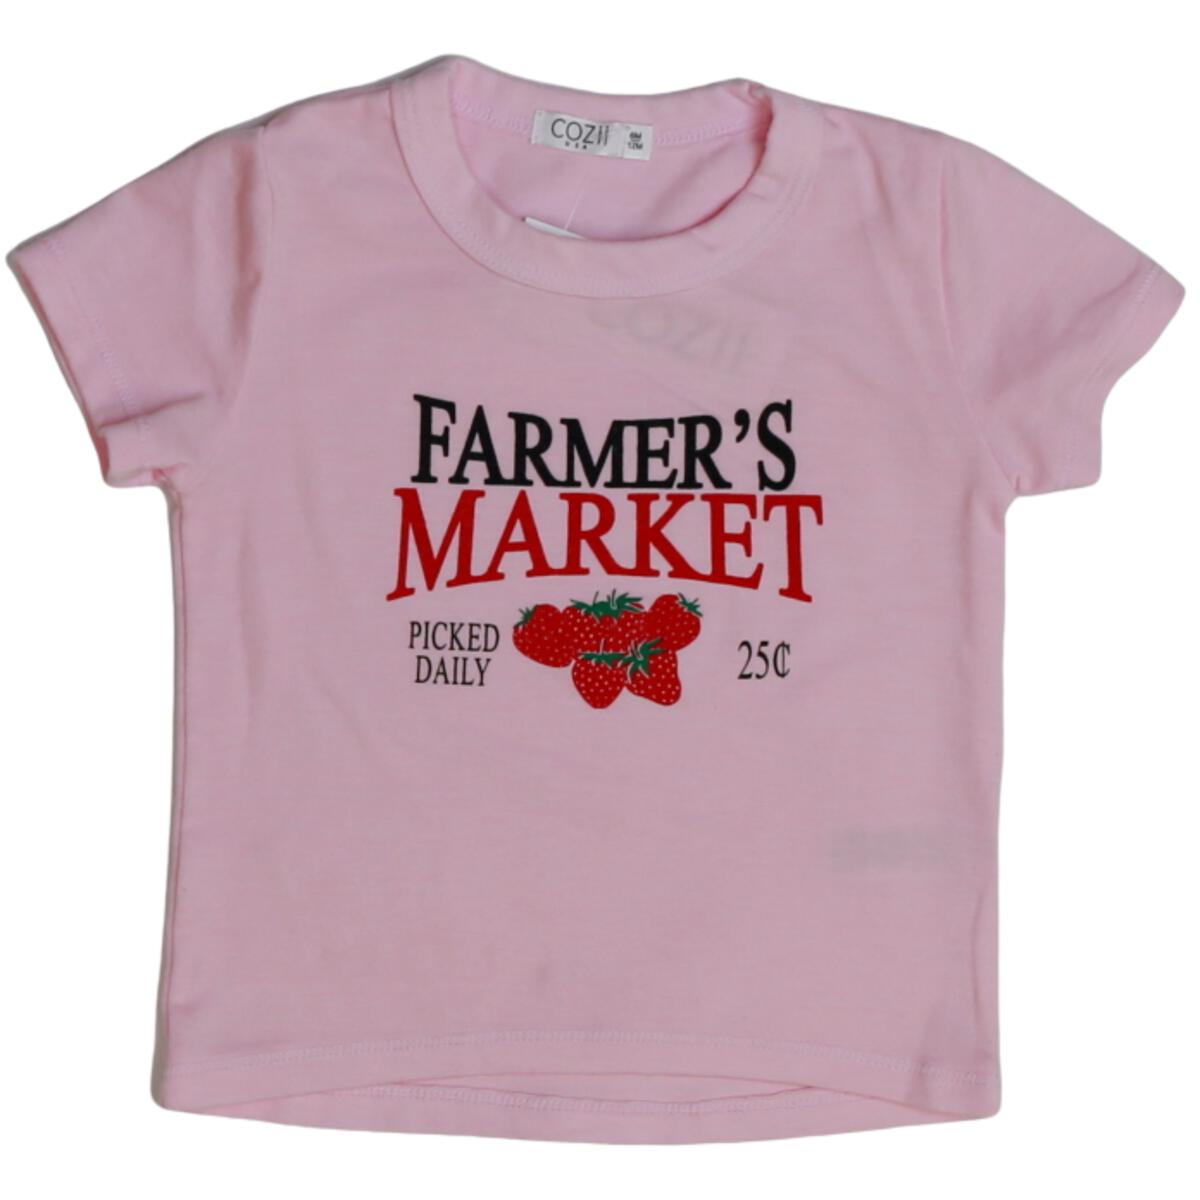 INFANT FARMERS MARKET PINK T-SHIRT